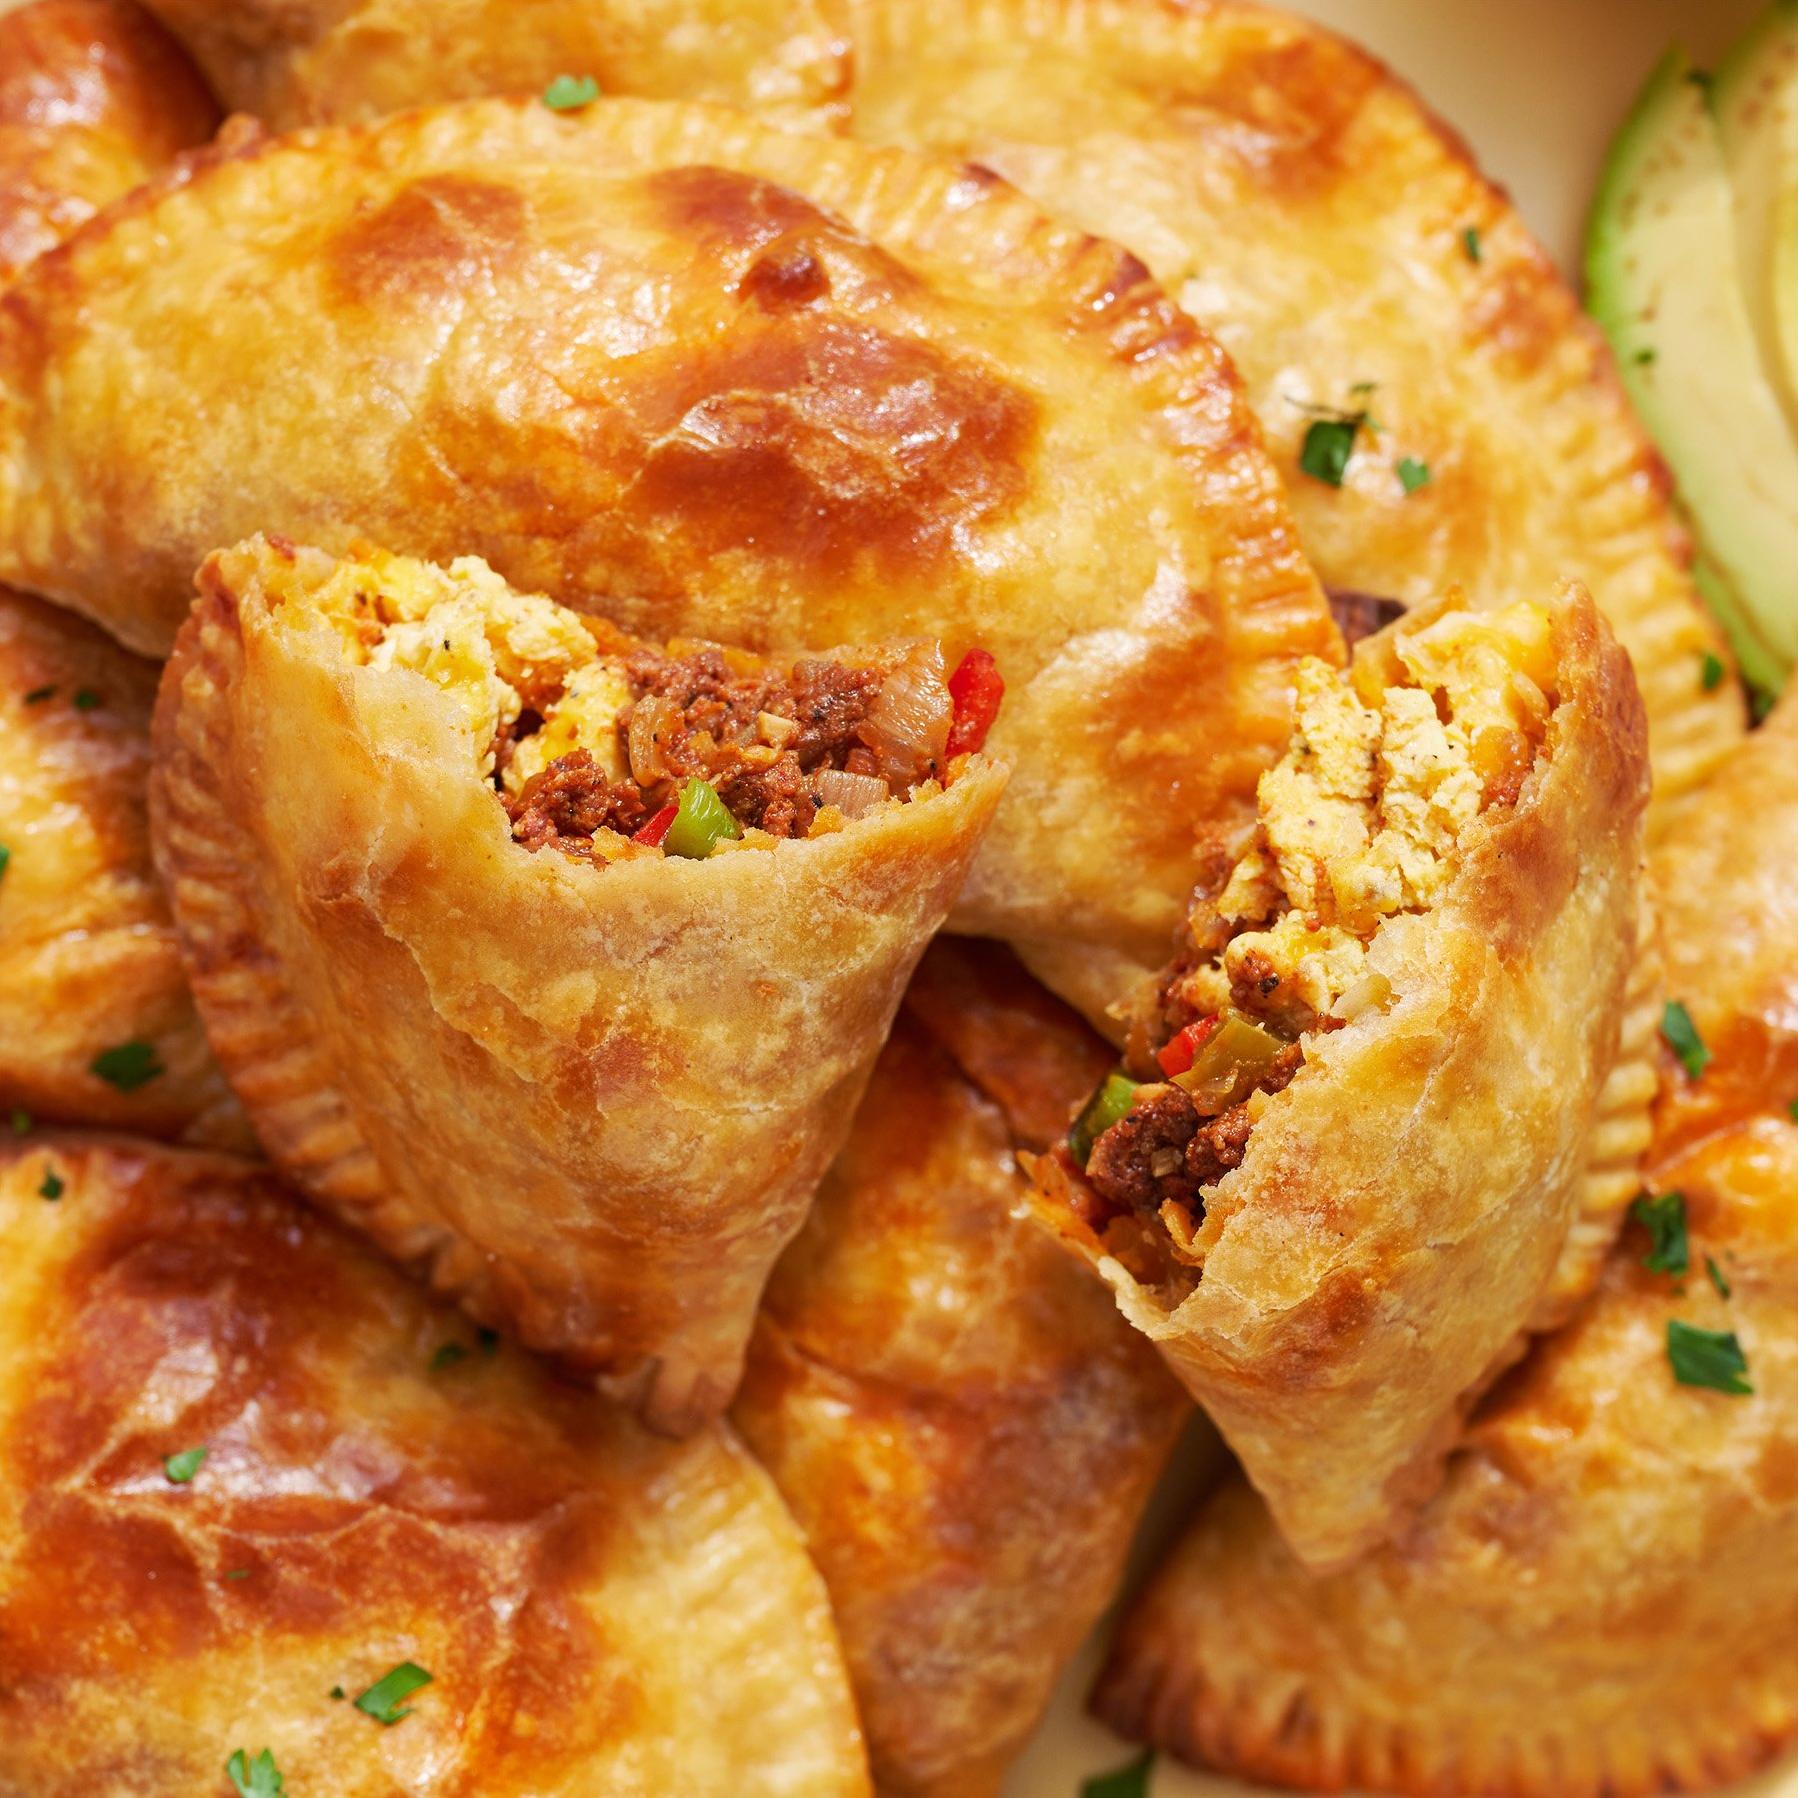  Wake up your taste buds with these Breakfast Empanadas!